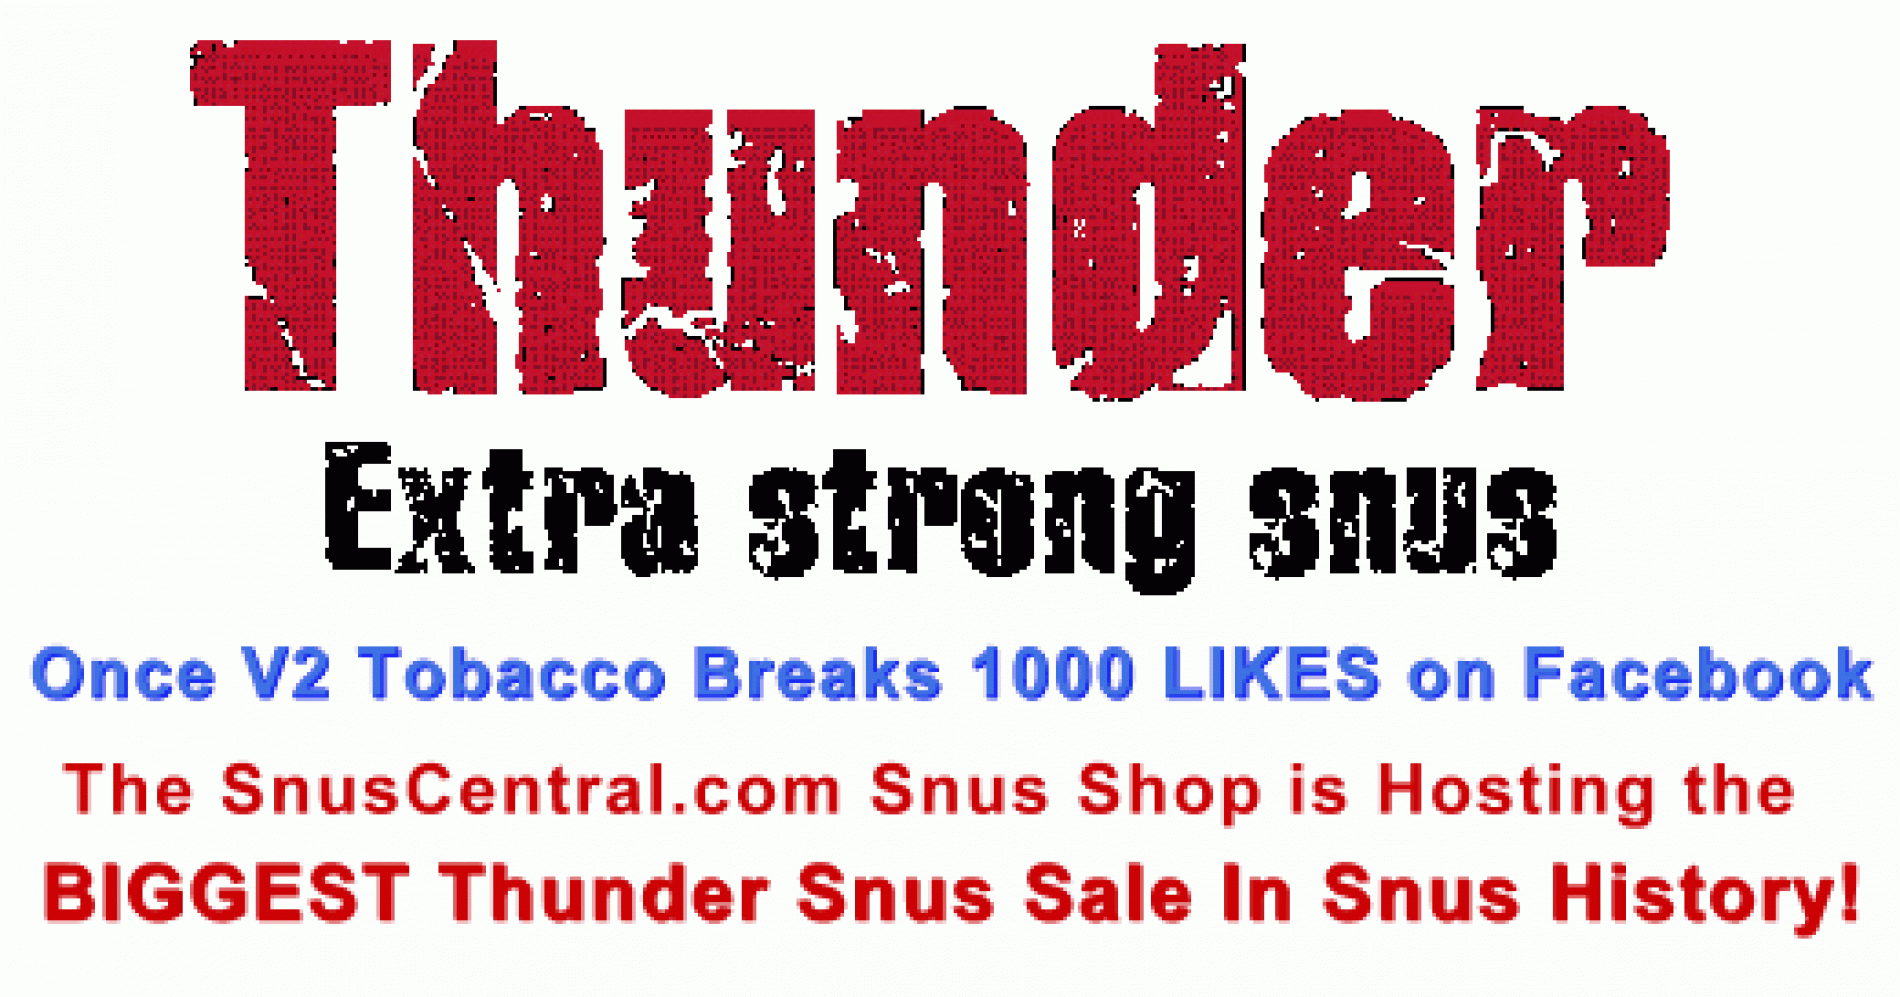 Free Snus; Thunder Snus prices SLASHED; The V2 1000 LIKES Facebook Event.